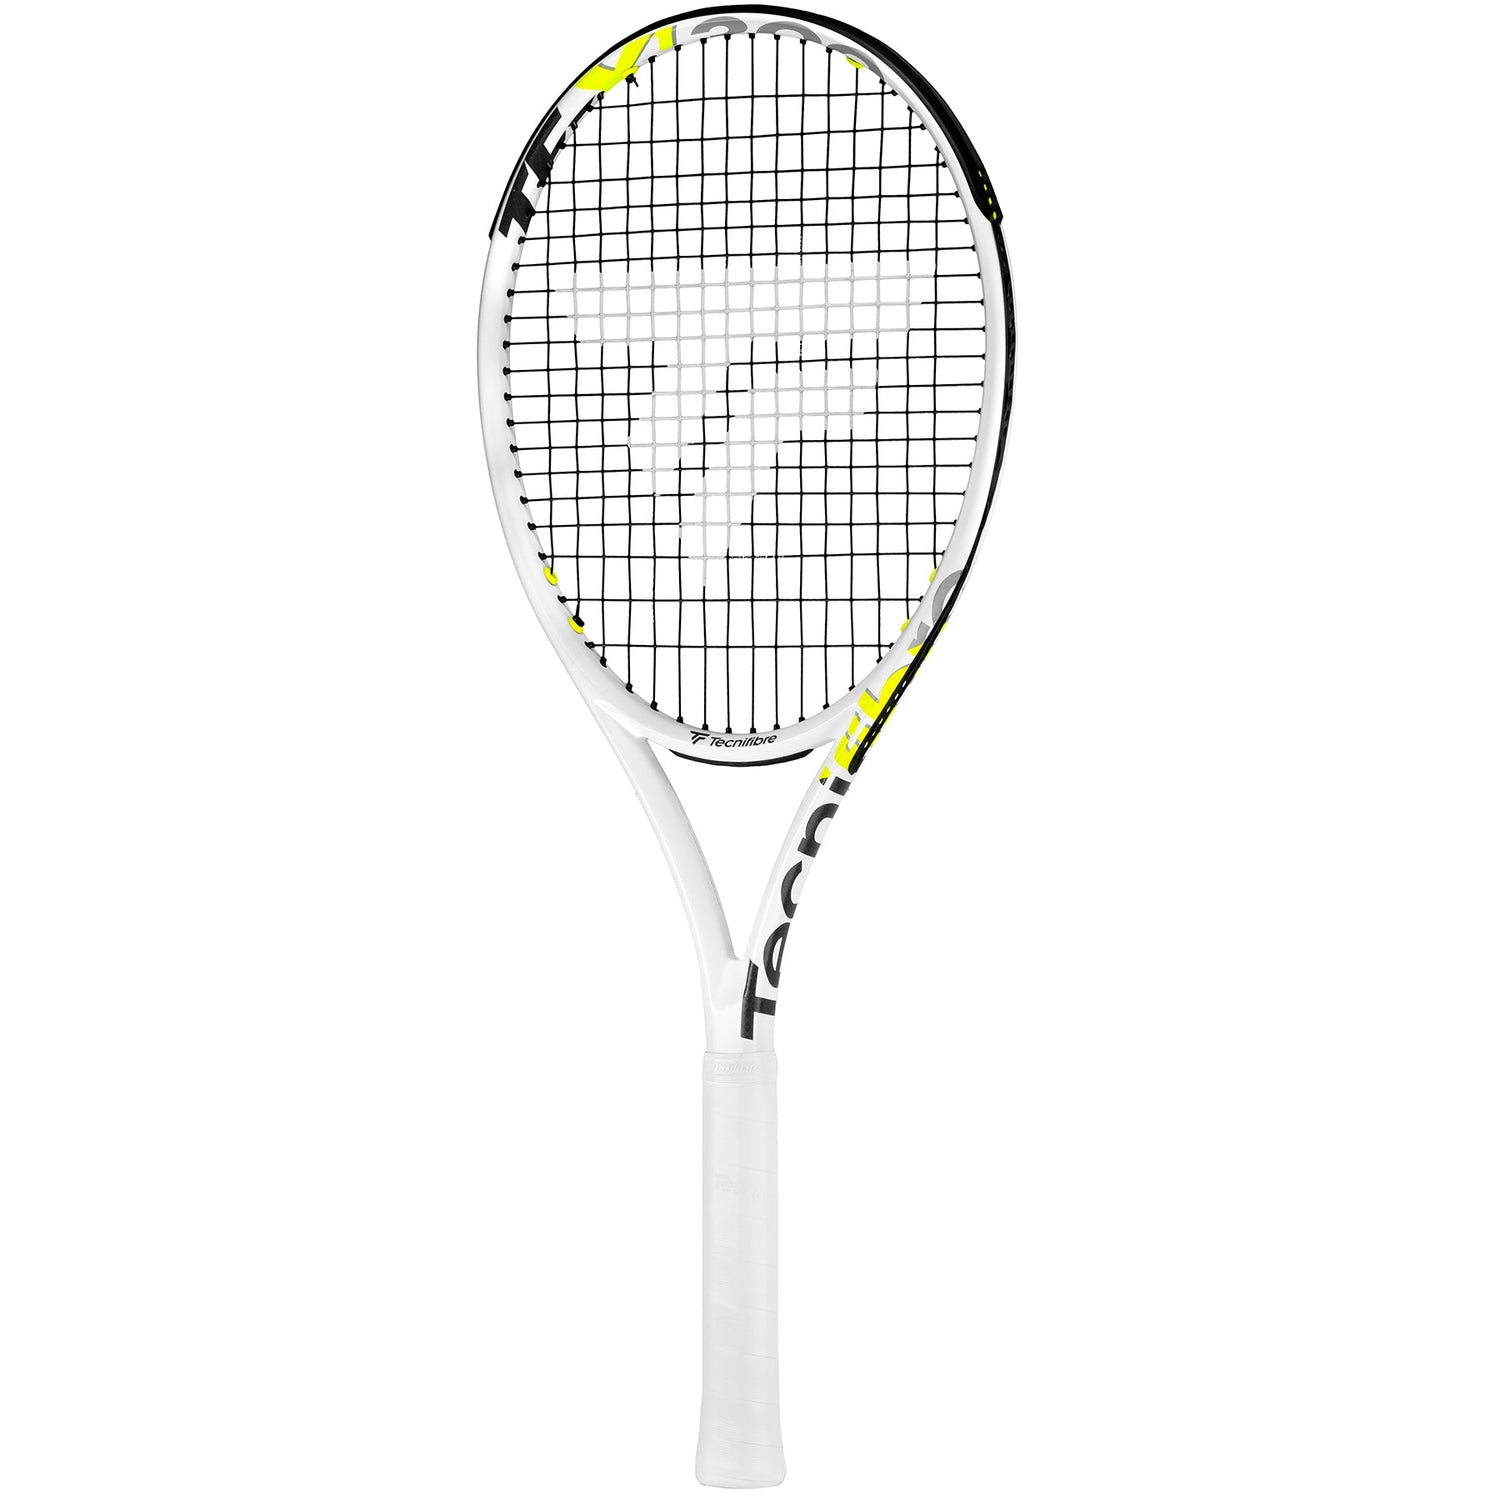 Wilson Overgrip Absorbent, 6 grips green or black. Tennis rackets, padel,  Badminton. Good grip, tough, great absorption.